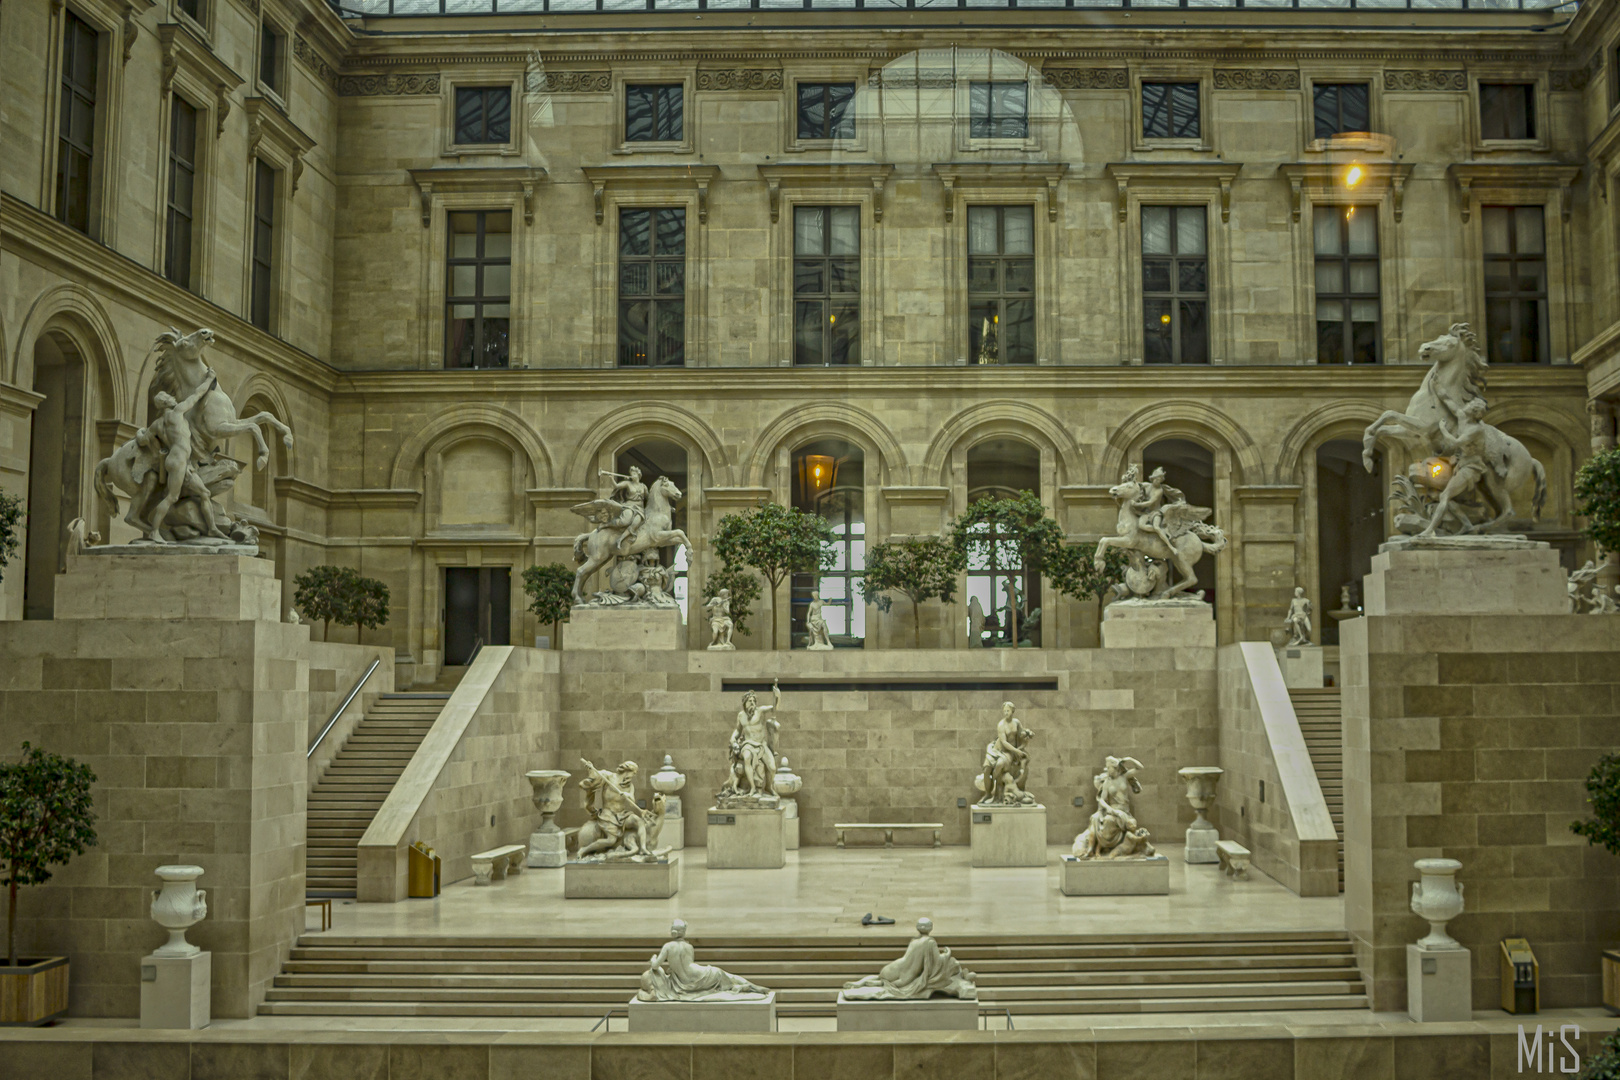 Museo del Louvre - I